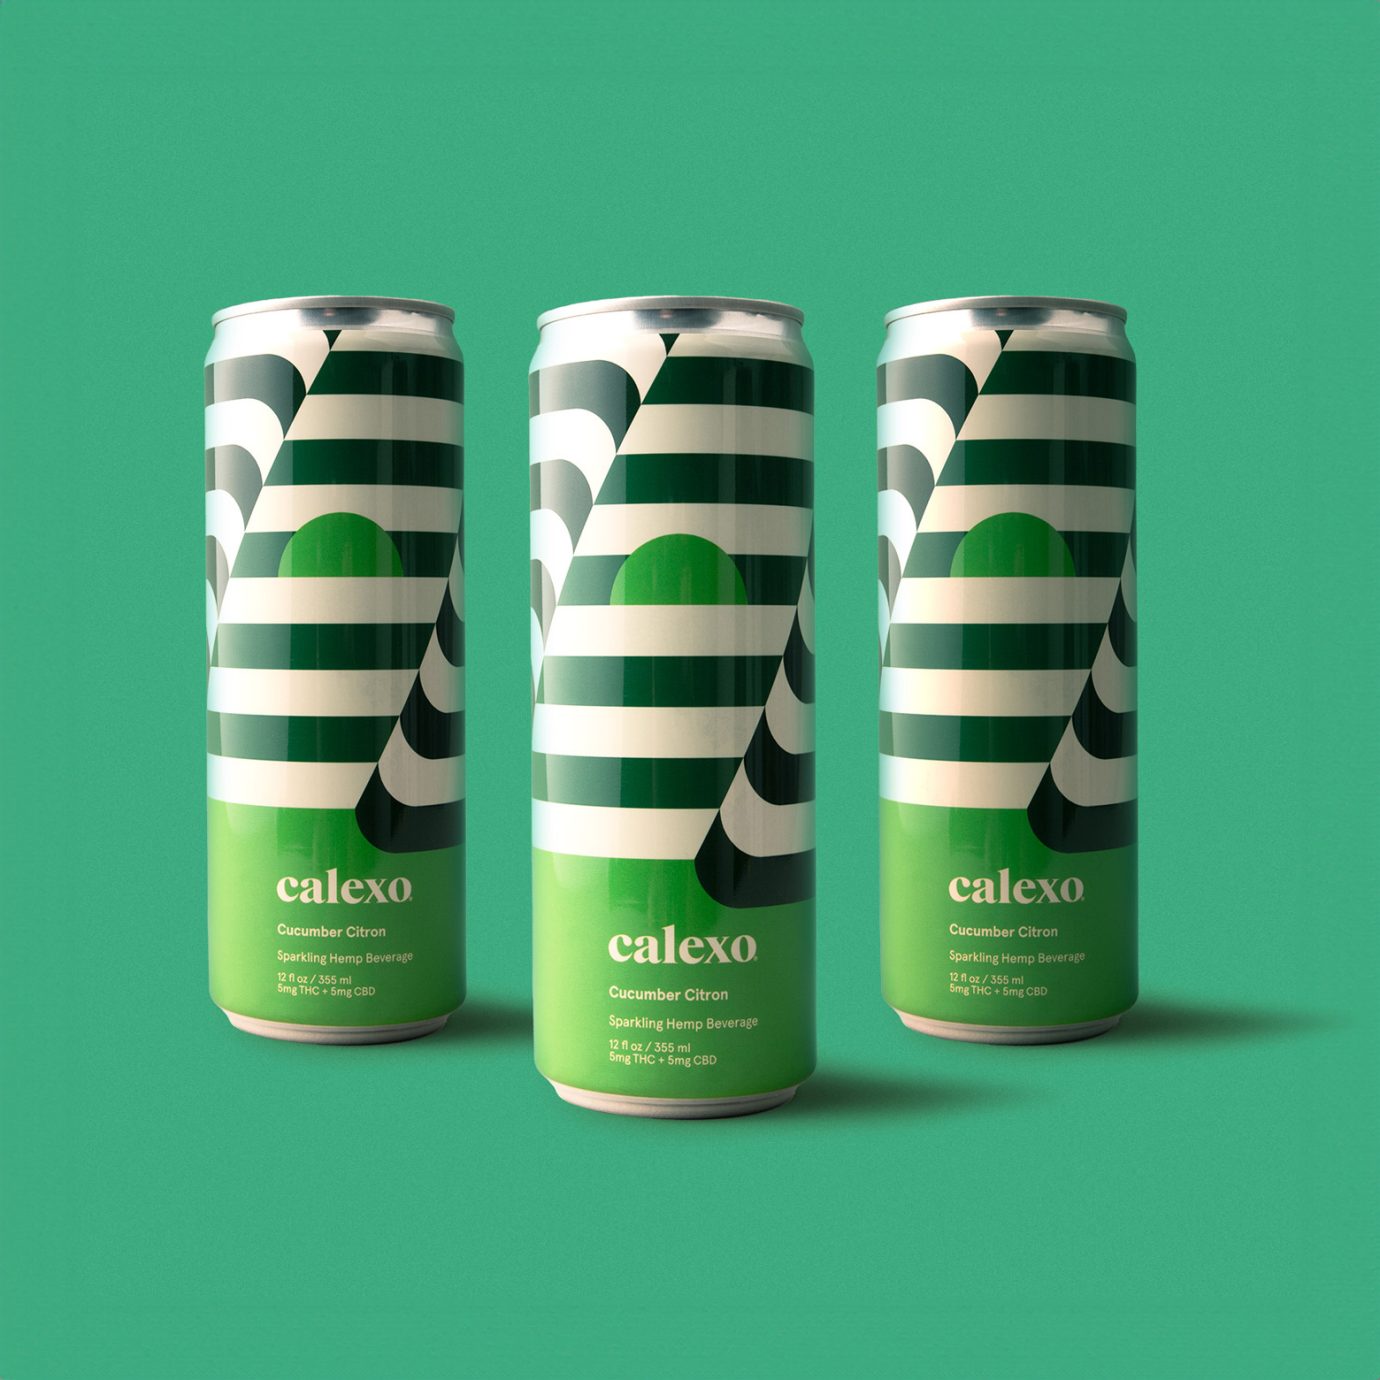 3 cucumber calexo hemp beverage cans on green backdrop